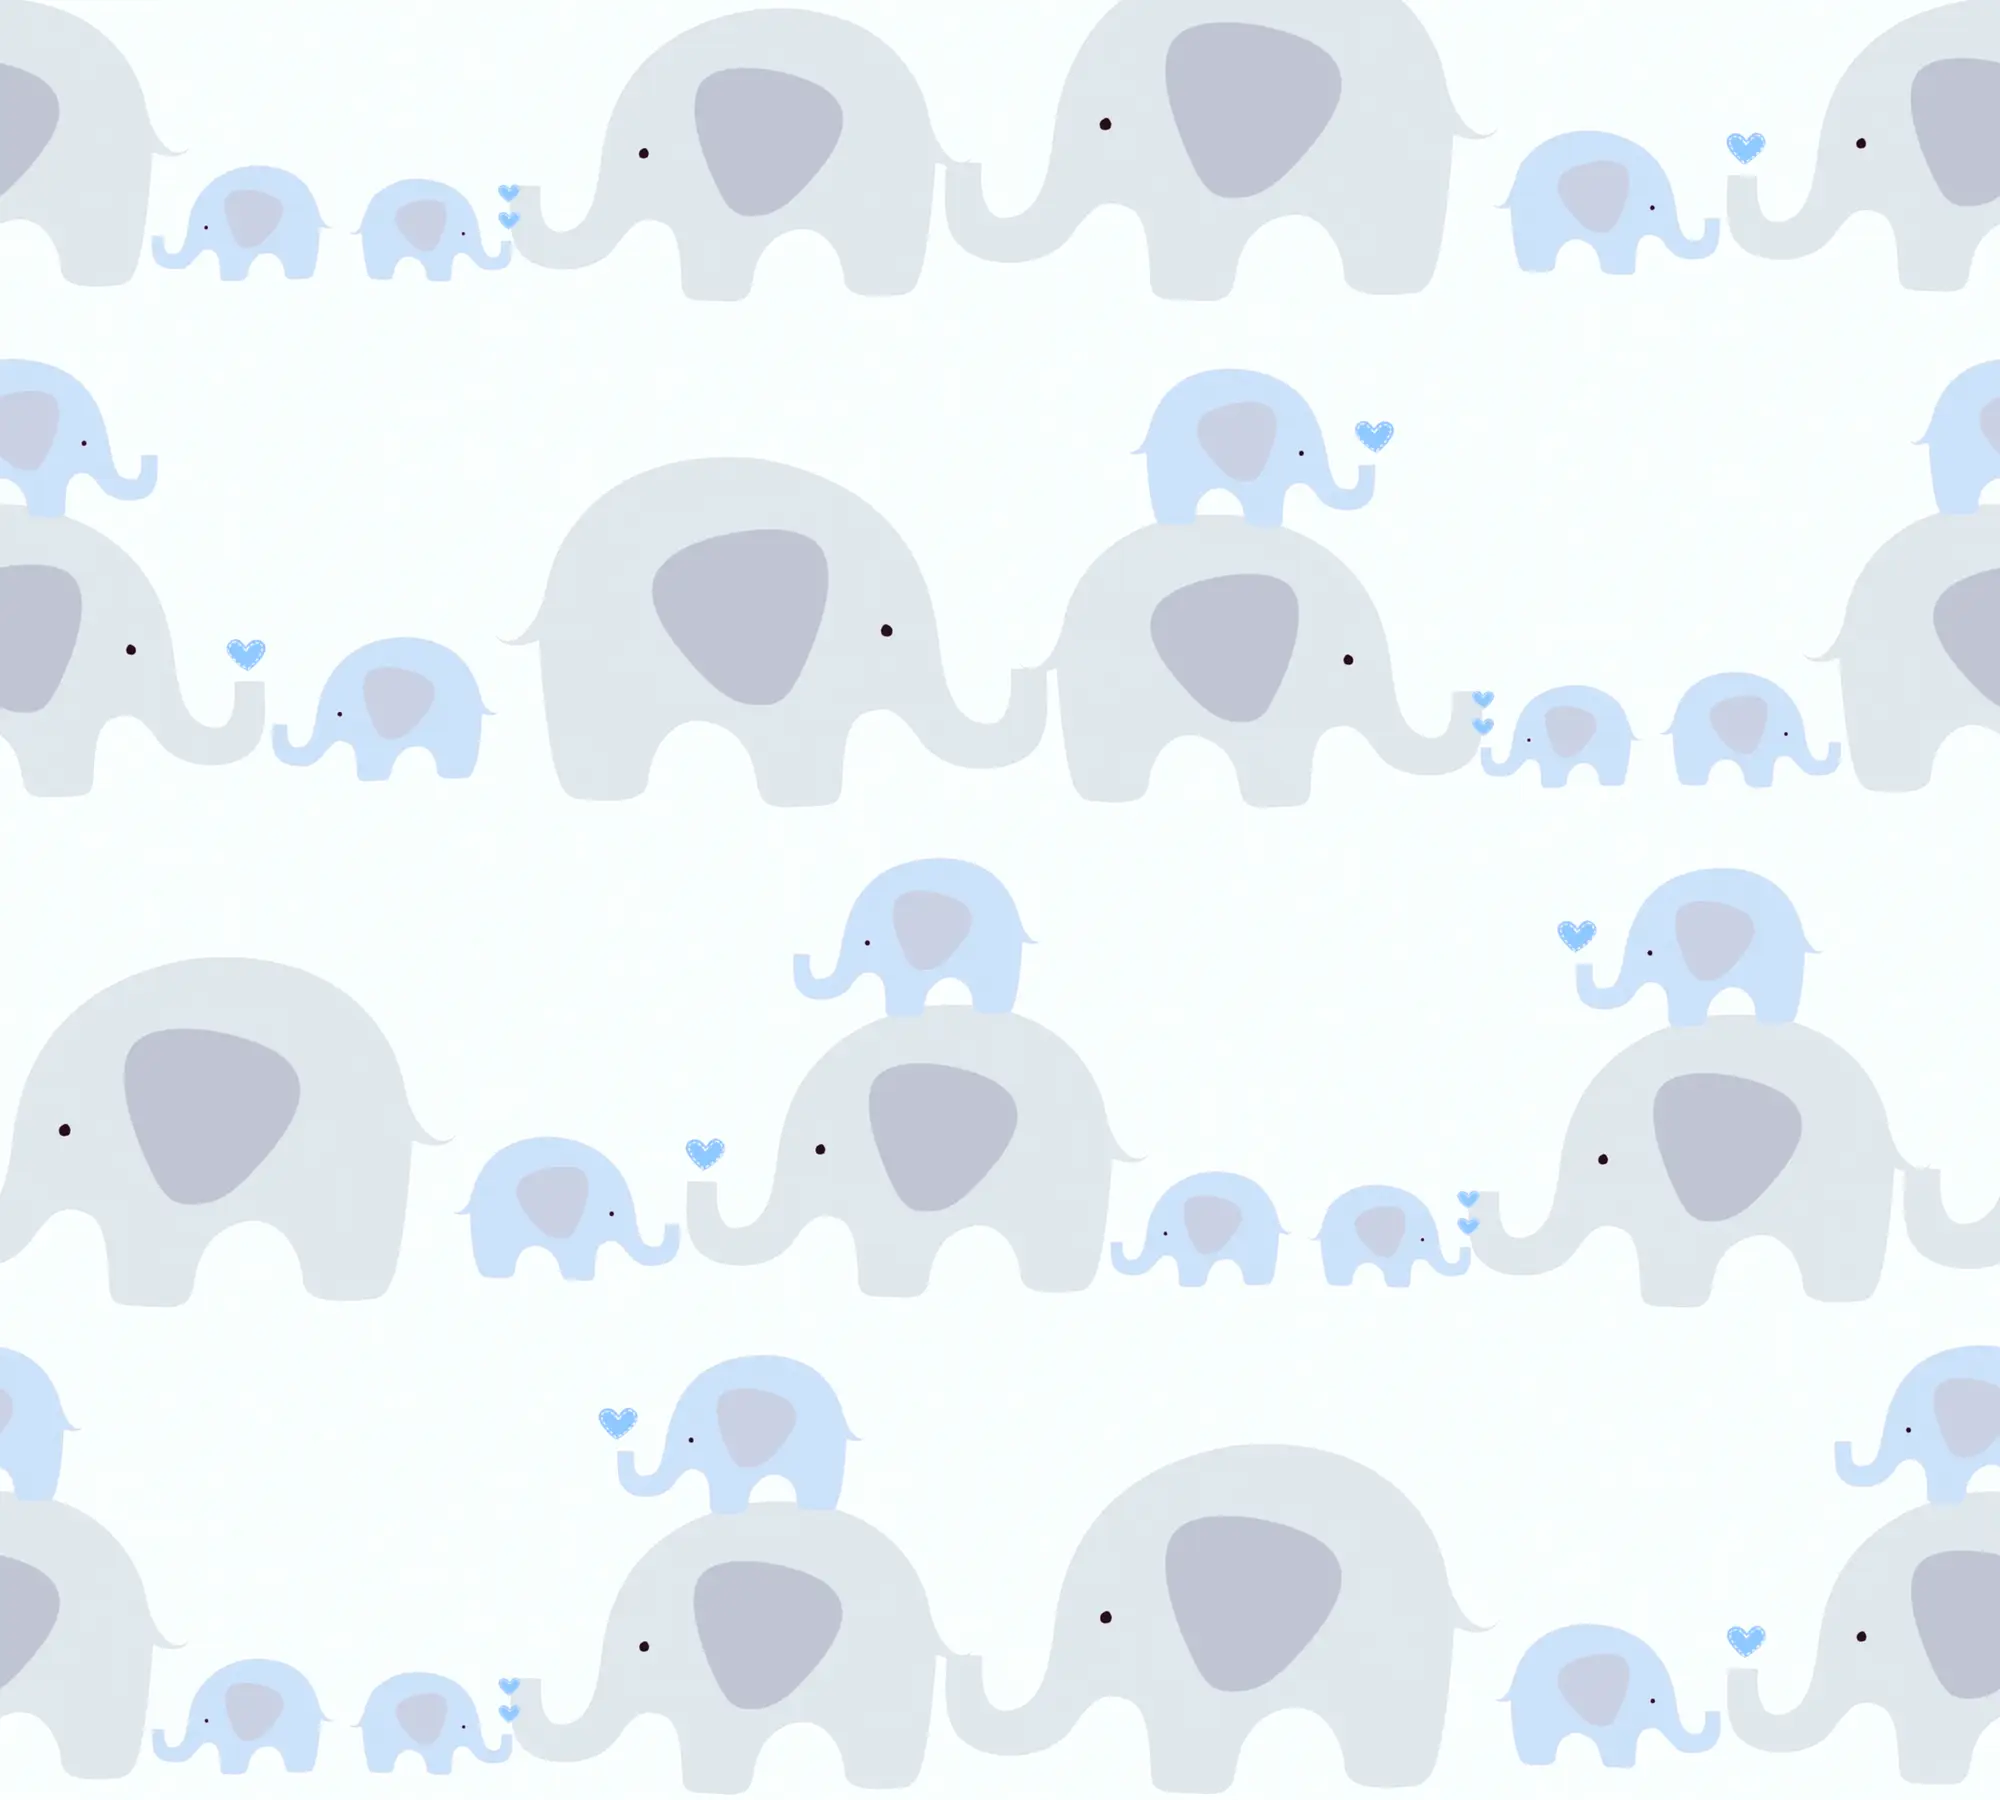 Kinderzimmertapete Elefanten Blau Wei脽